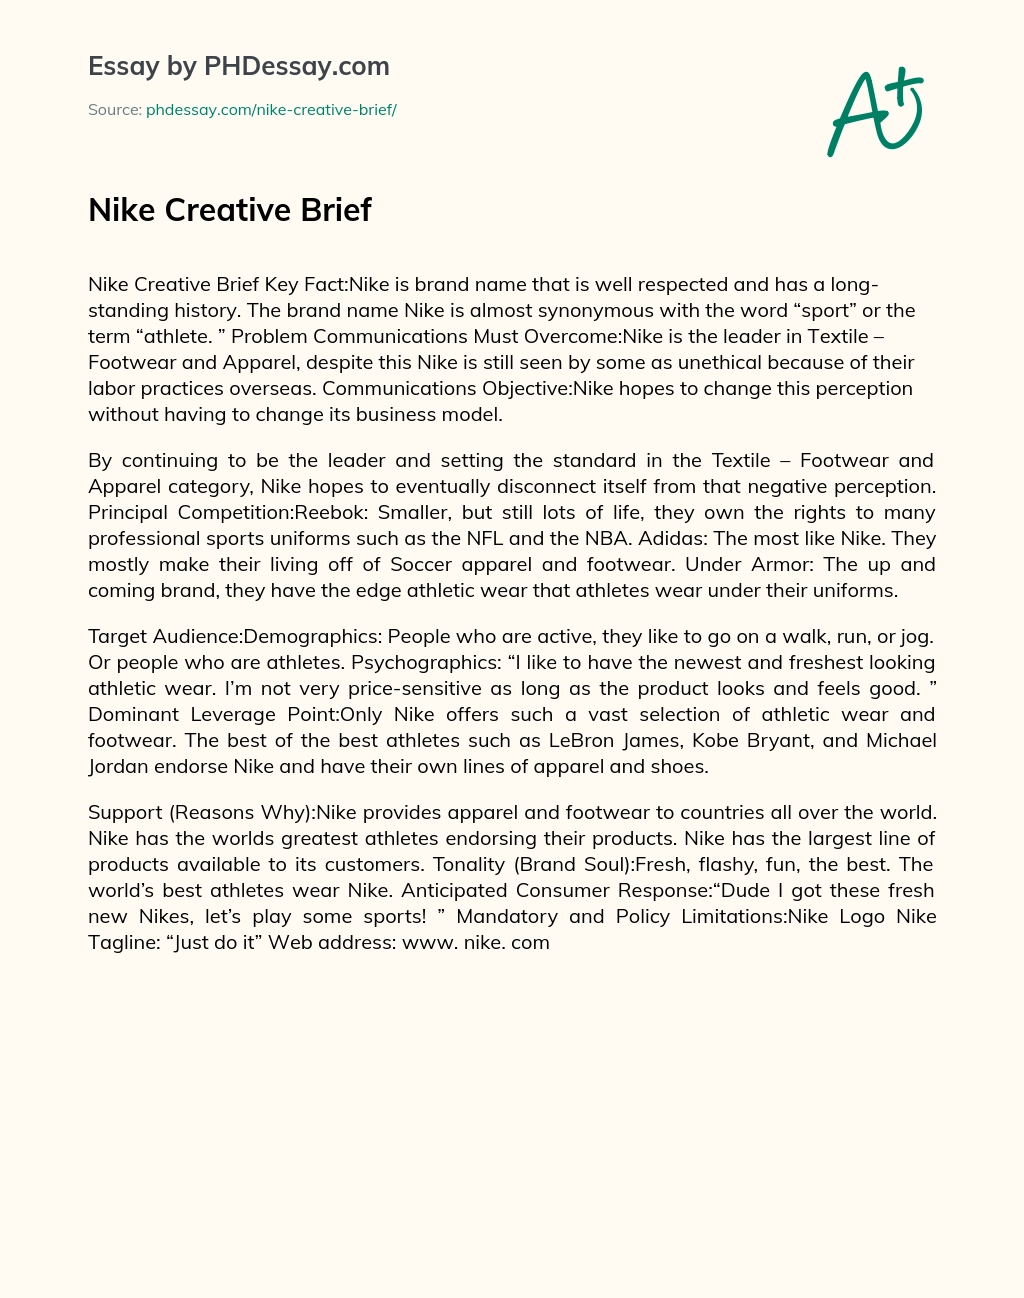 Nike Creative Brief essay